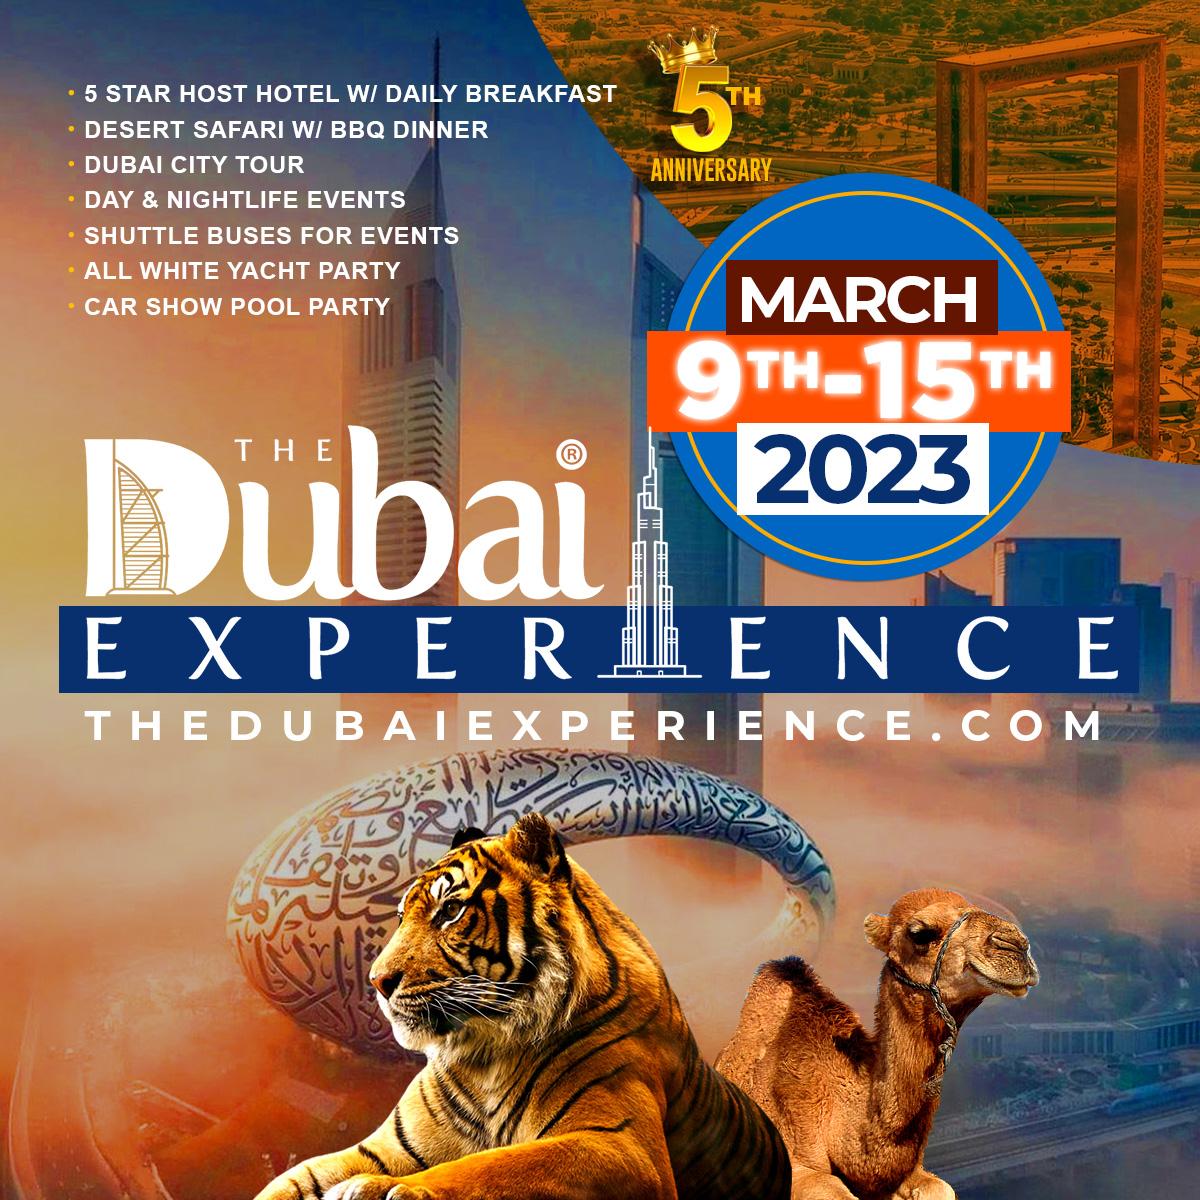 THE DUBAI EXPERIENCE 5th Anniversary March 9 - 15, 2023 image